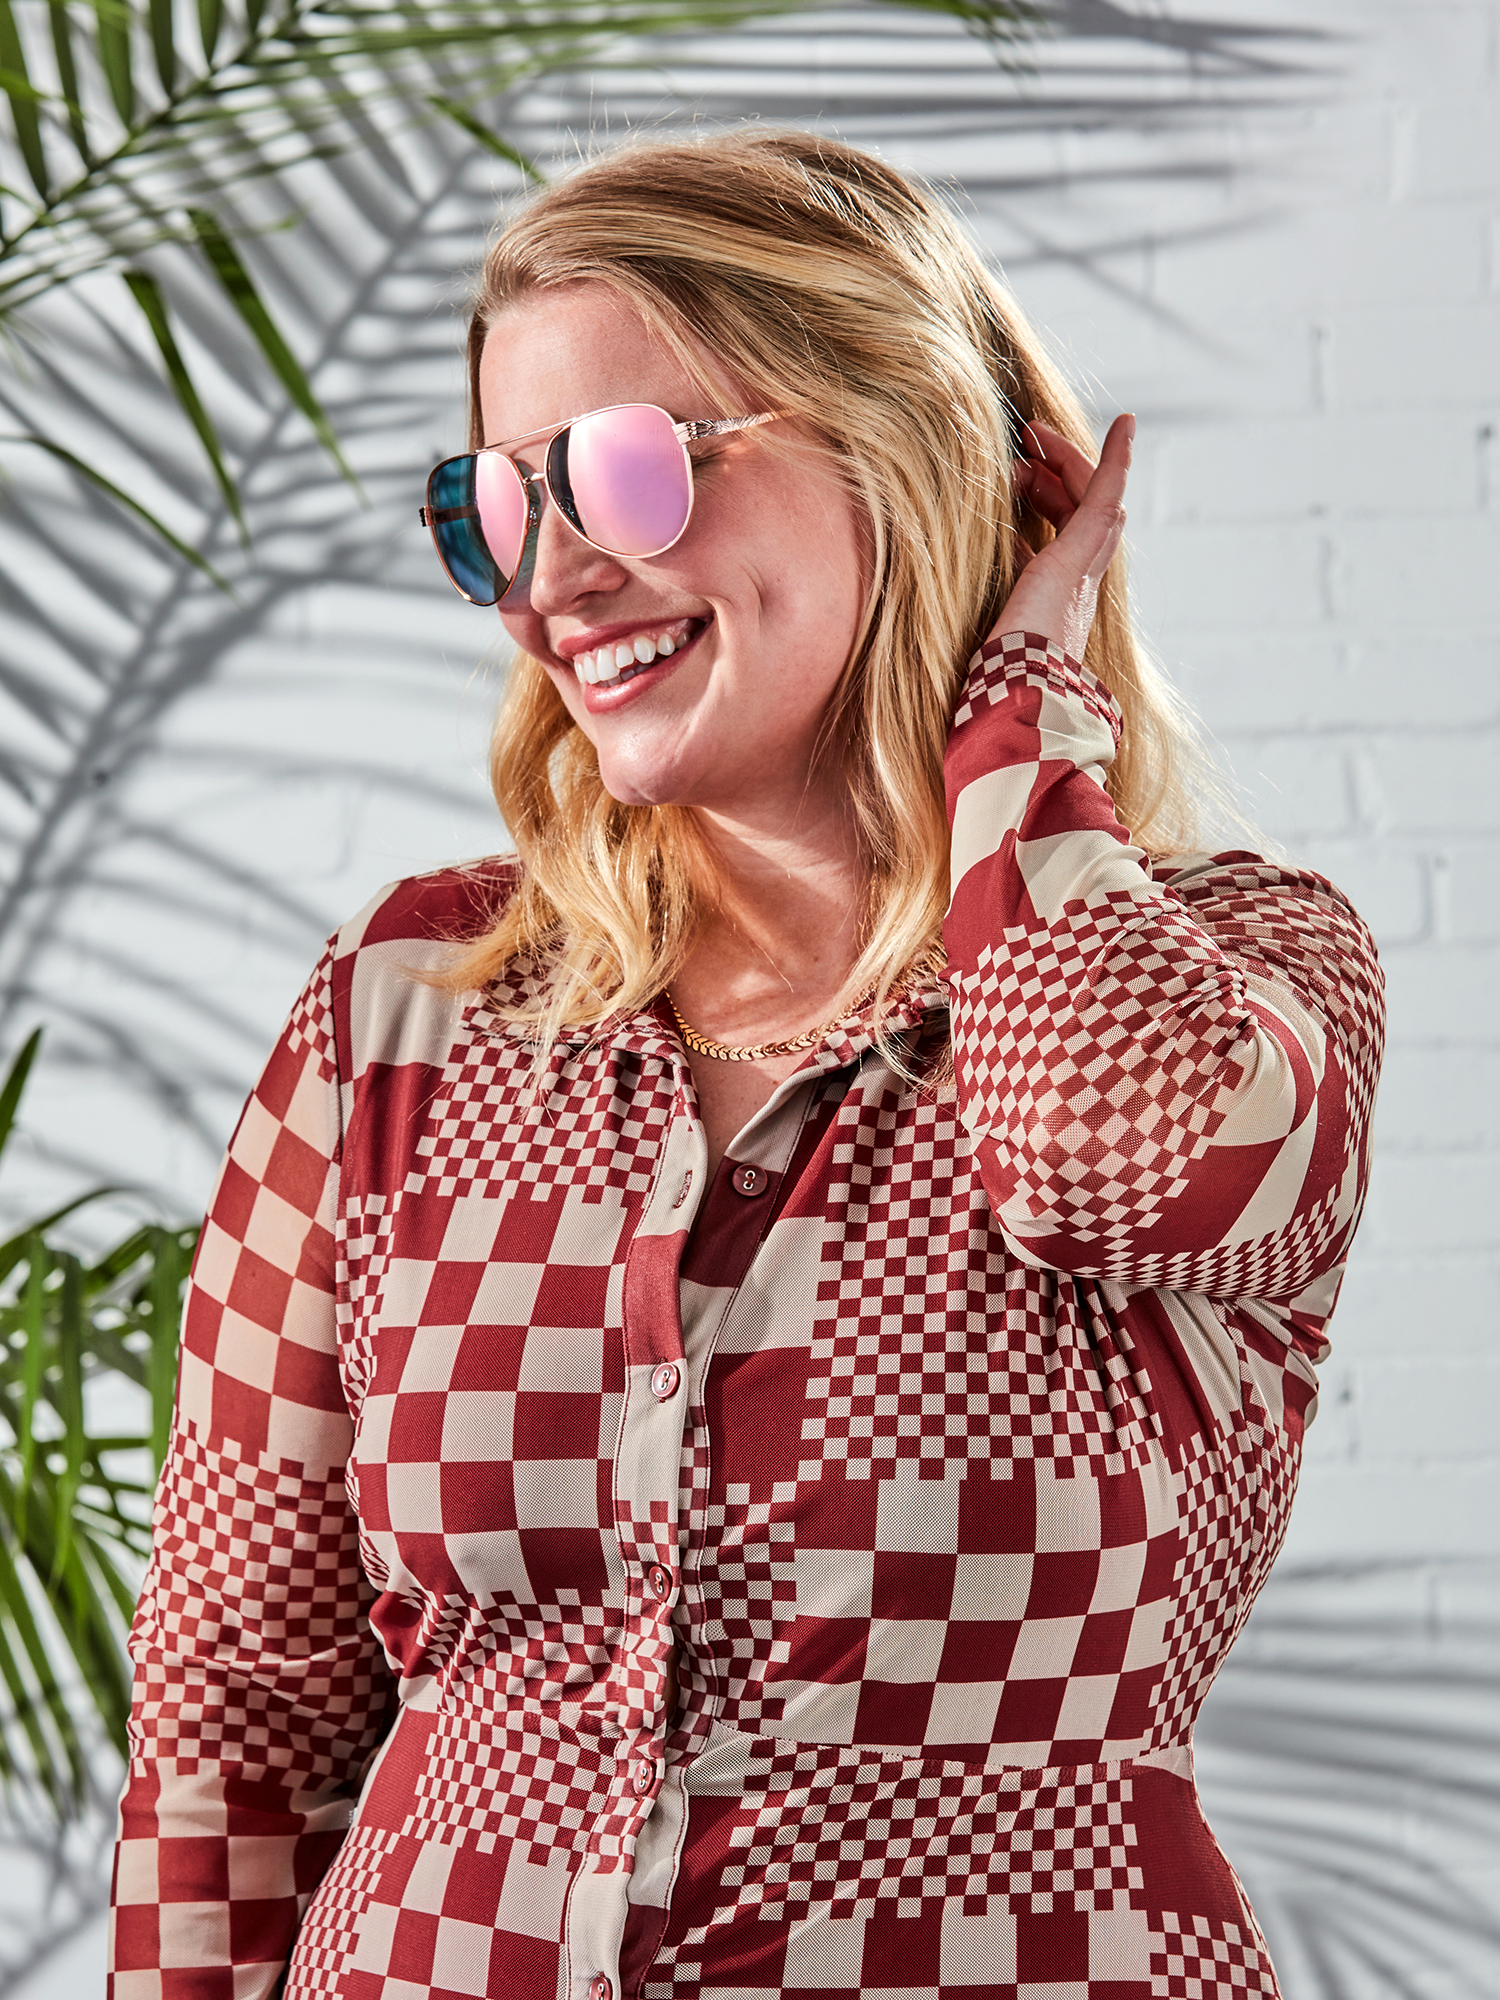 Foster Grant Women's Aviator Fashion Sunglasses Rose Gold - image 5 of 6